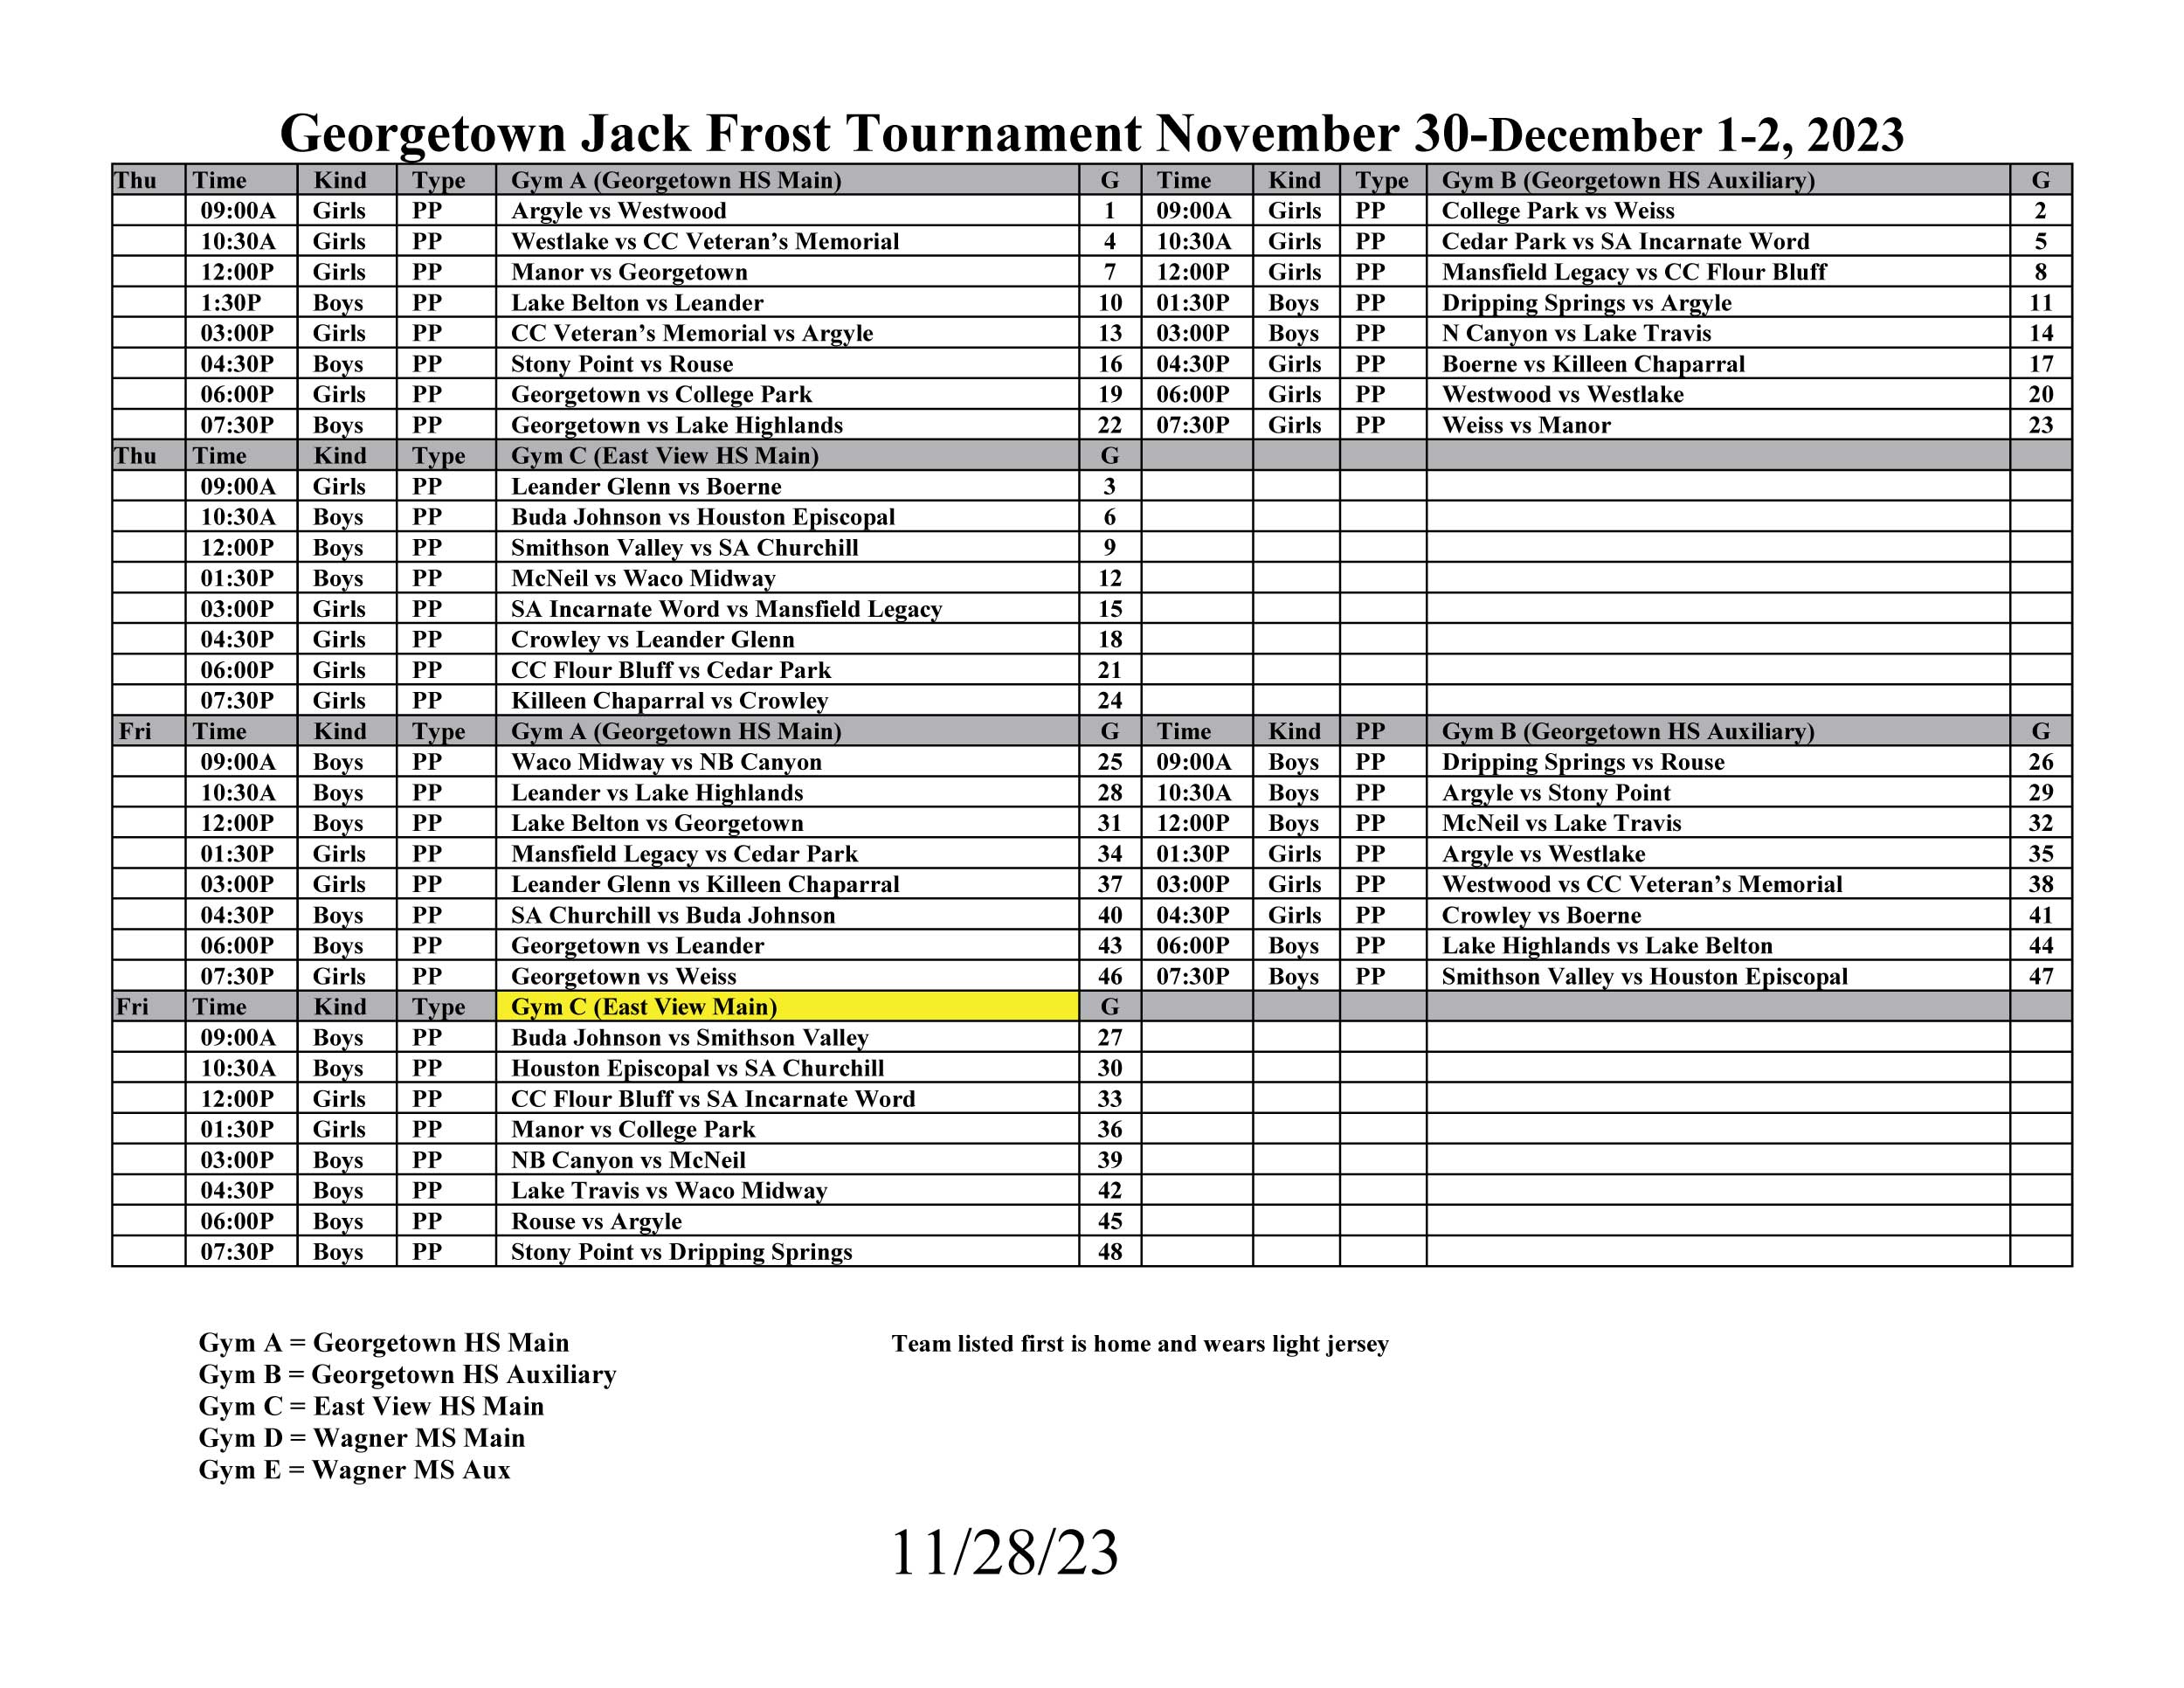 Jack Frost Tournament Master Schedule 1